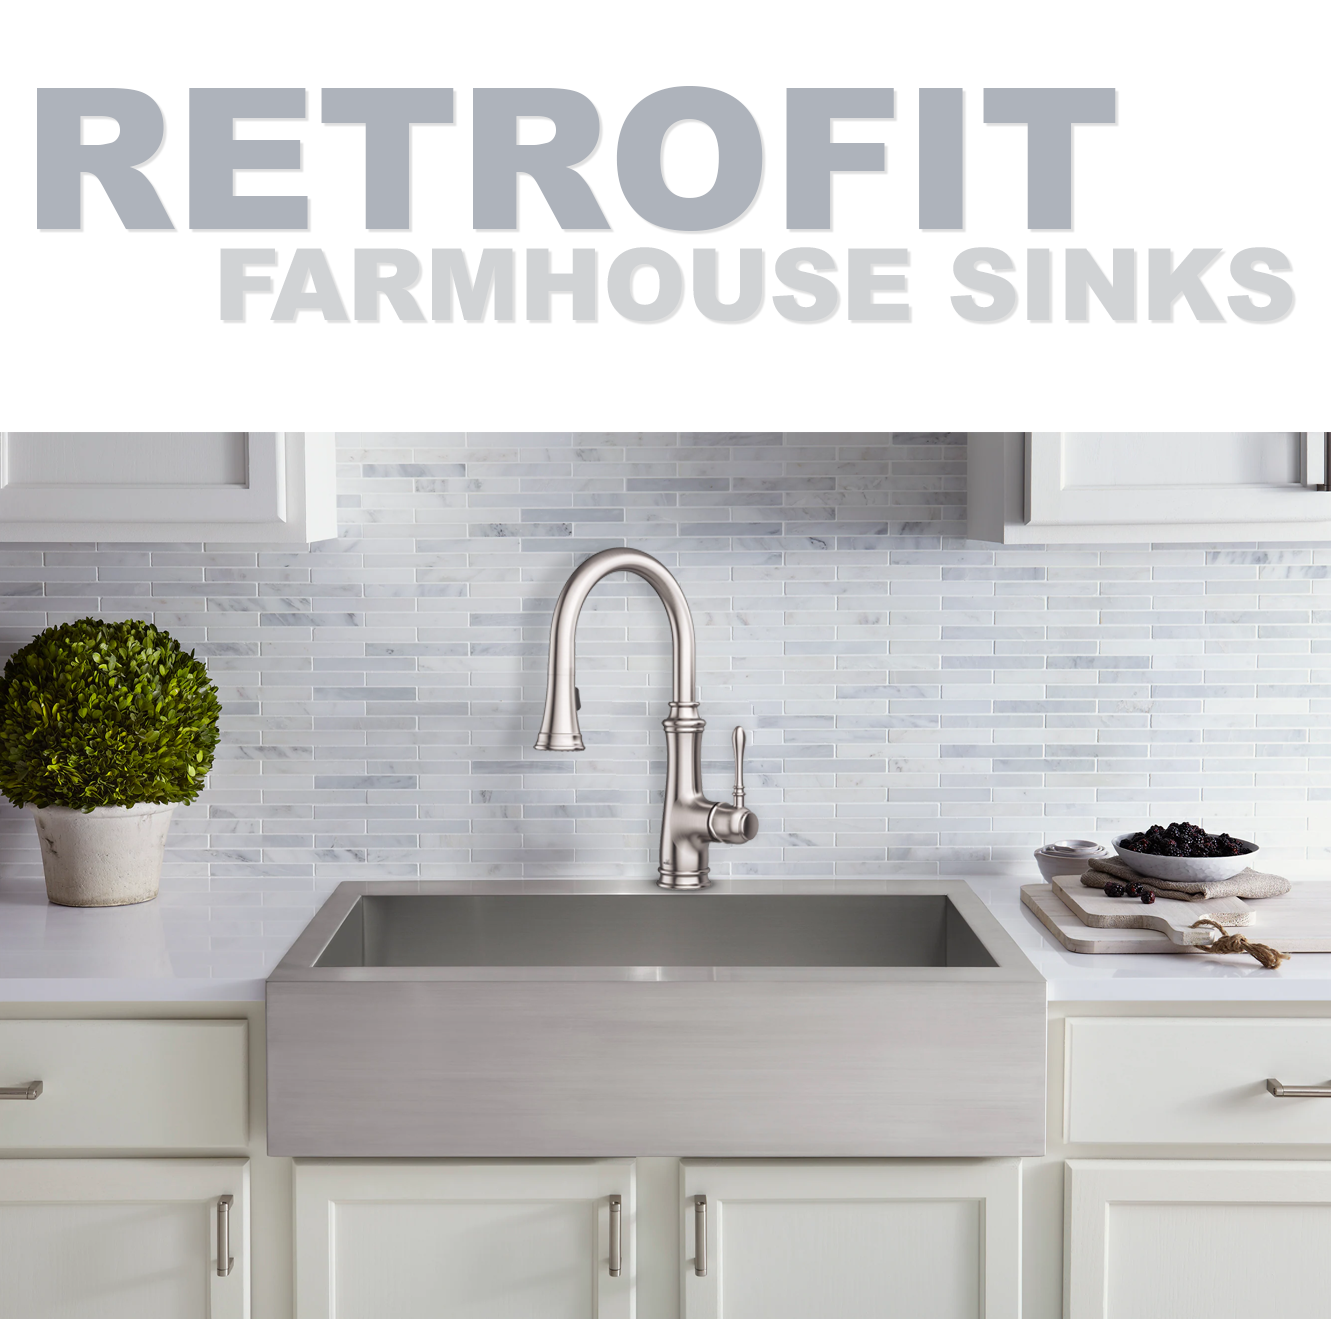 Retrofit Farmhouse Kitchen Sink